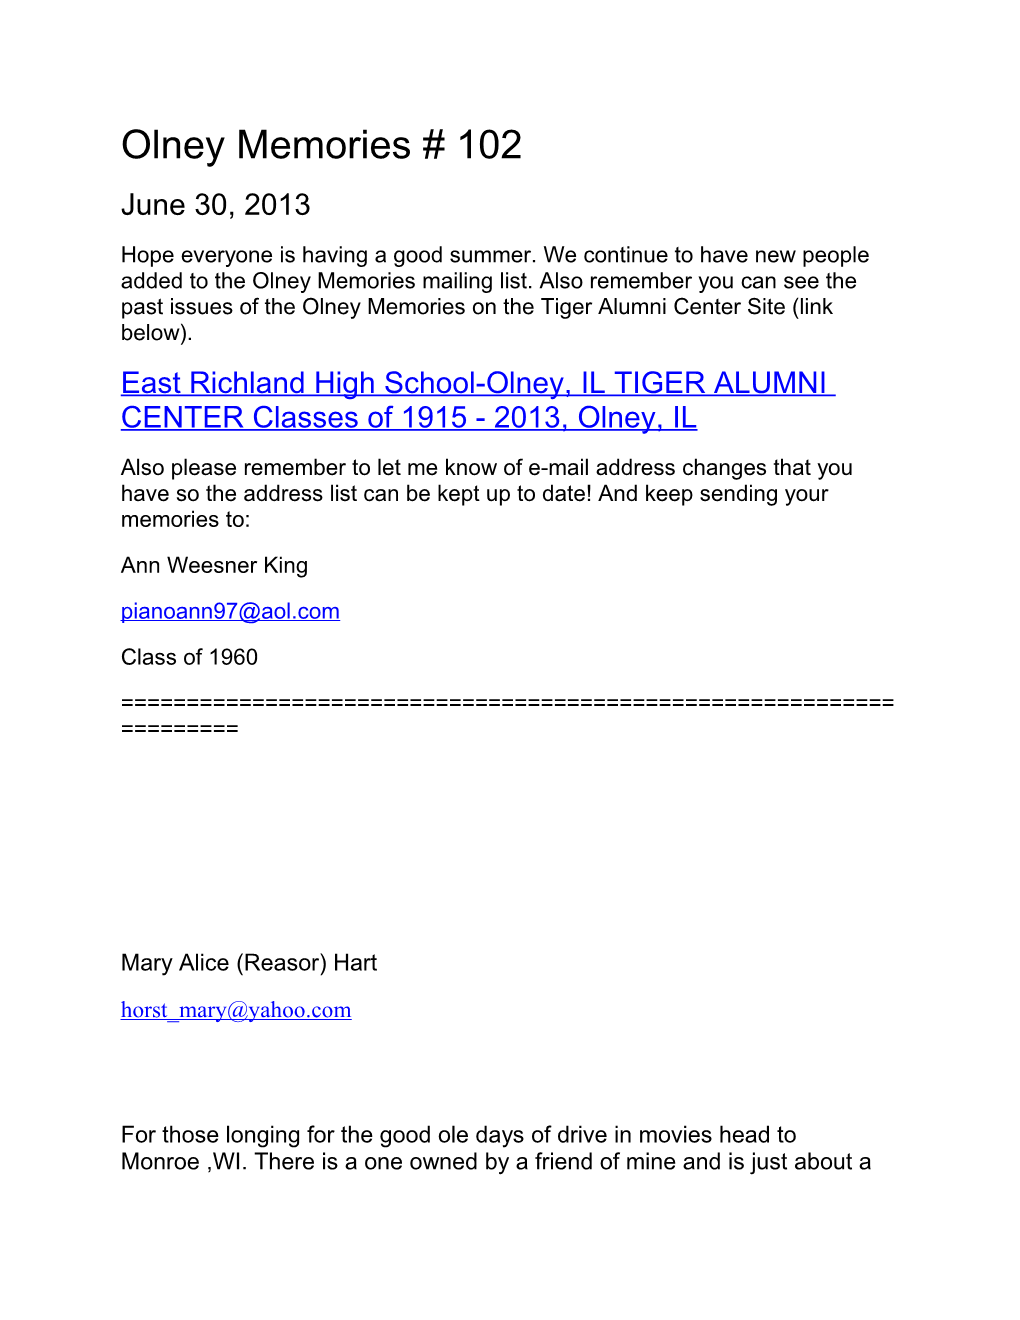 East Richland High School-Olney, IL TIGER ALUMNI CENTER Classes of 1915 - 2013, Olney, IL